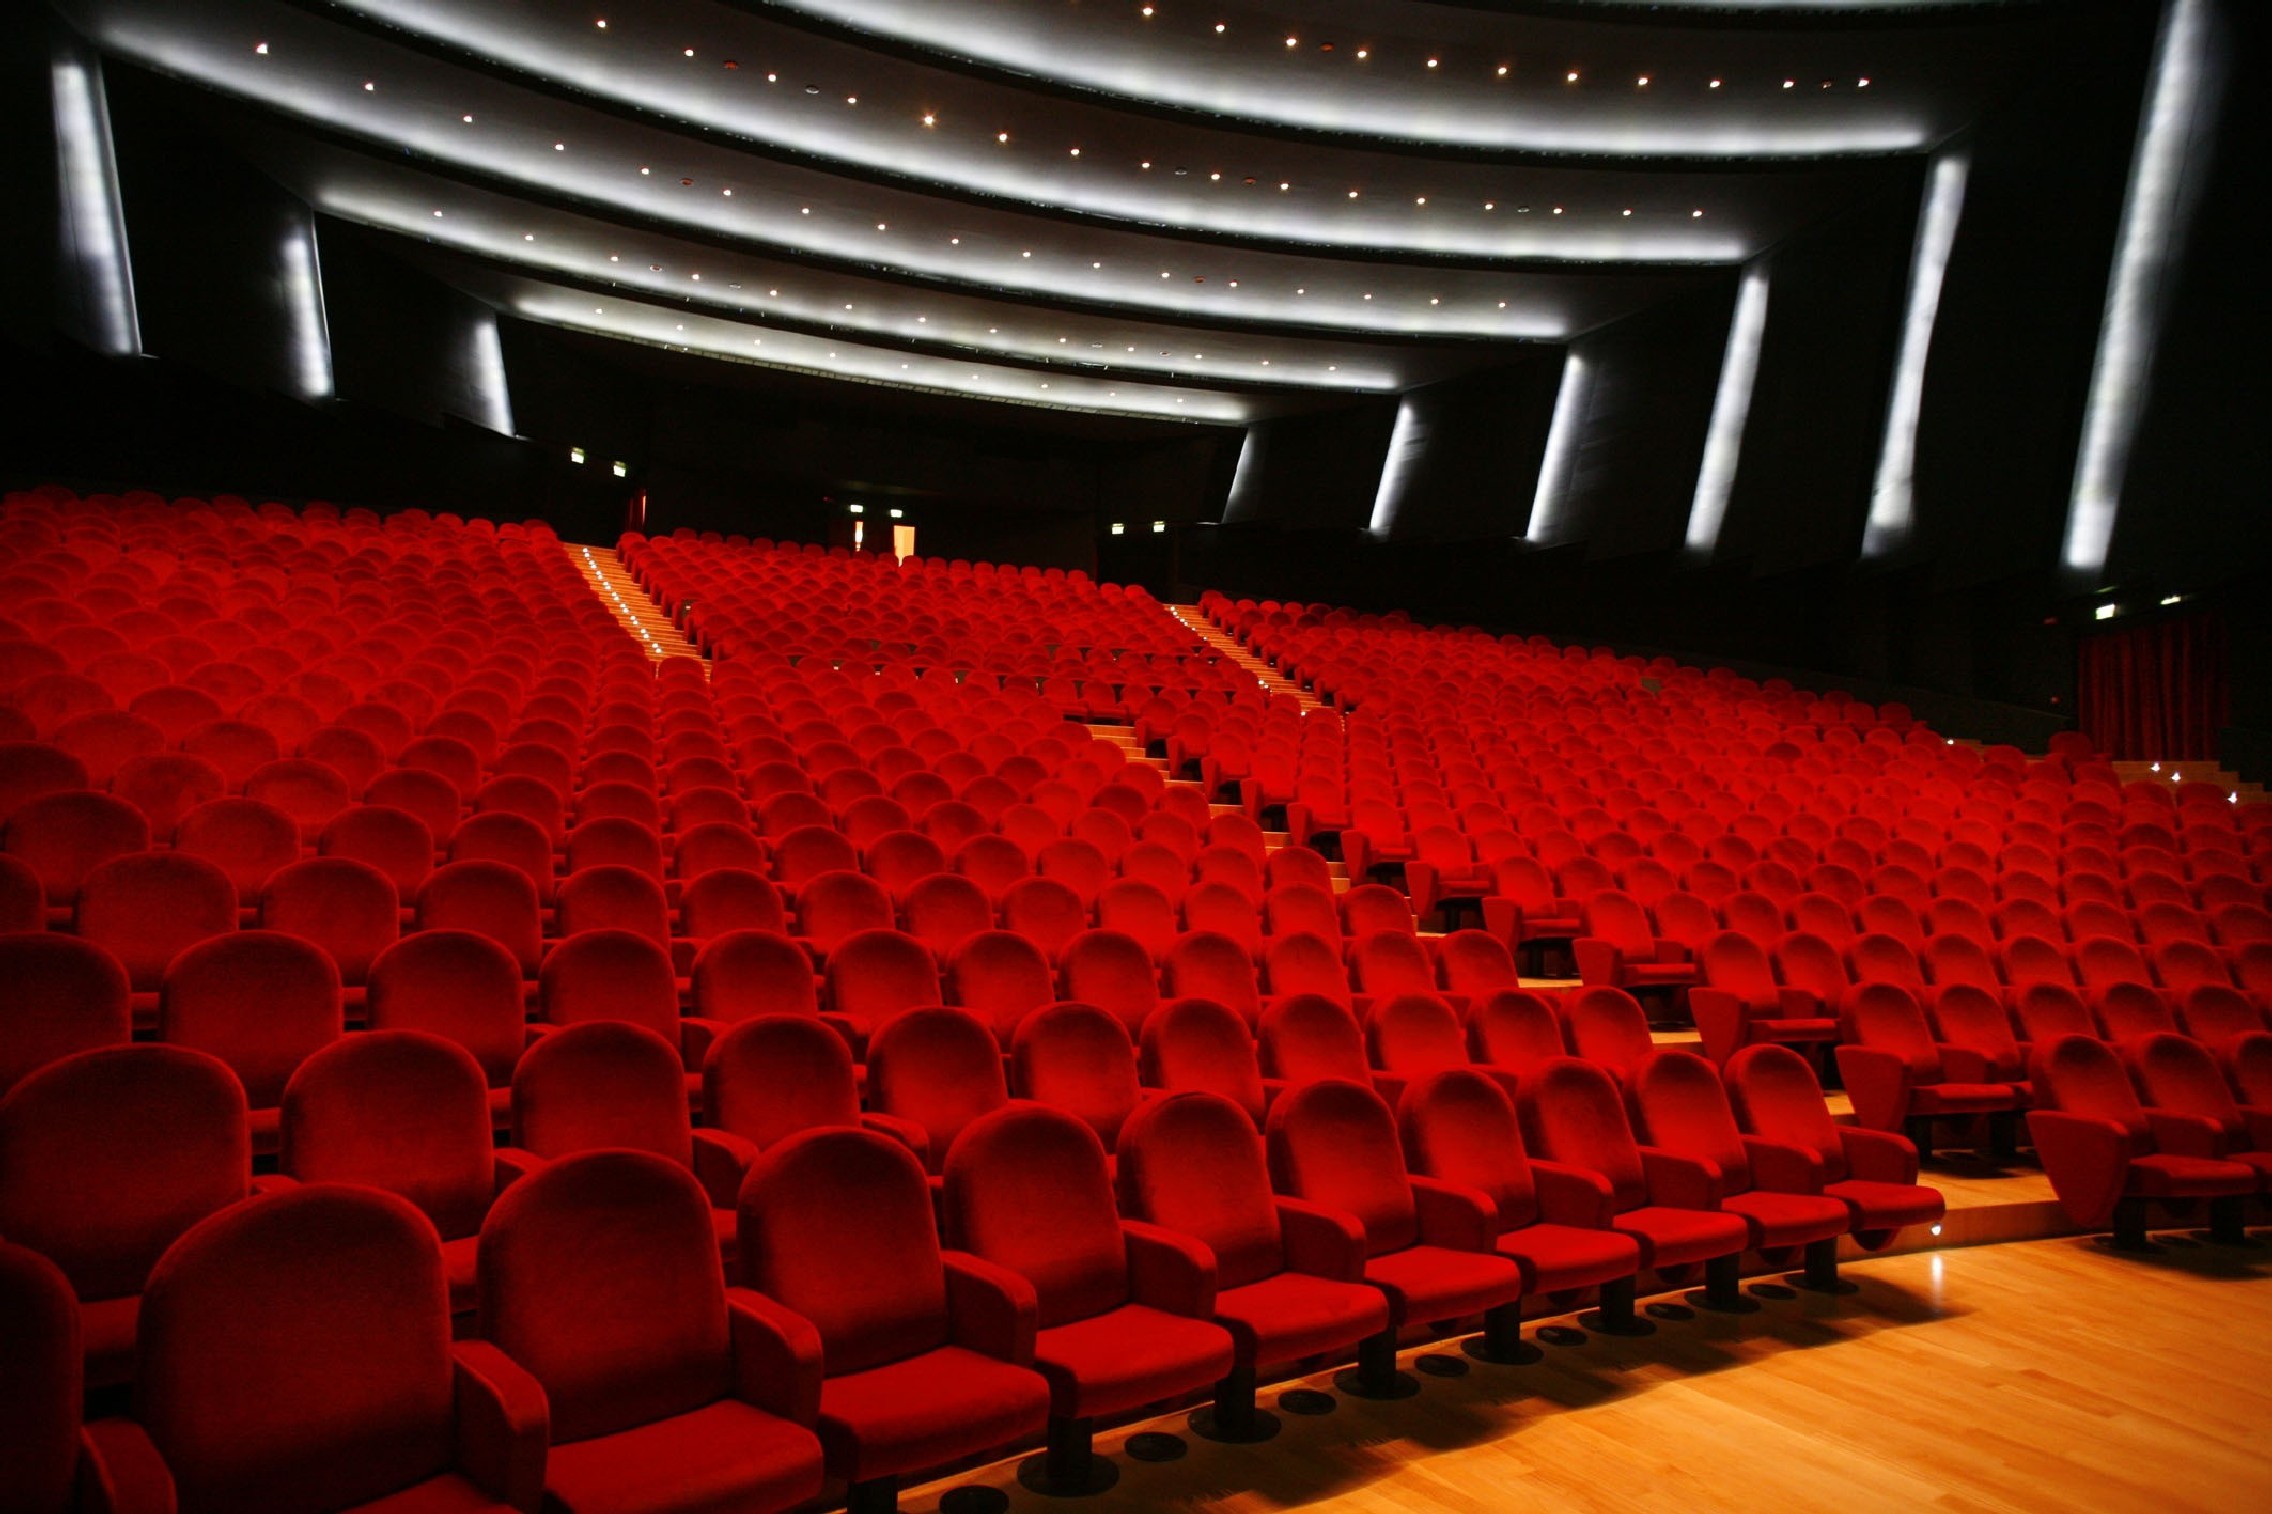 Theater seating. Большая аудитория и сцена. Палладиум театр Санкт-Петербург США. Theater Seats. Seats in the Theatre.